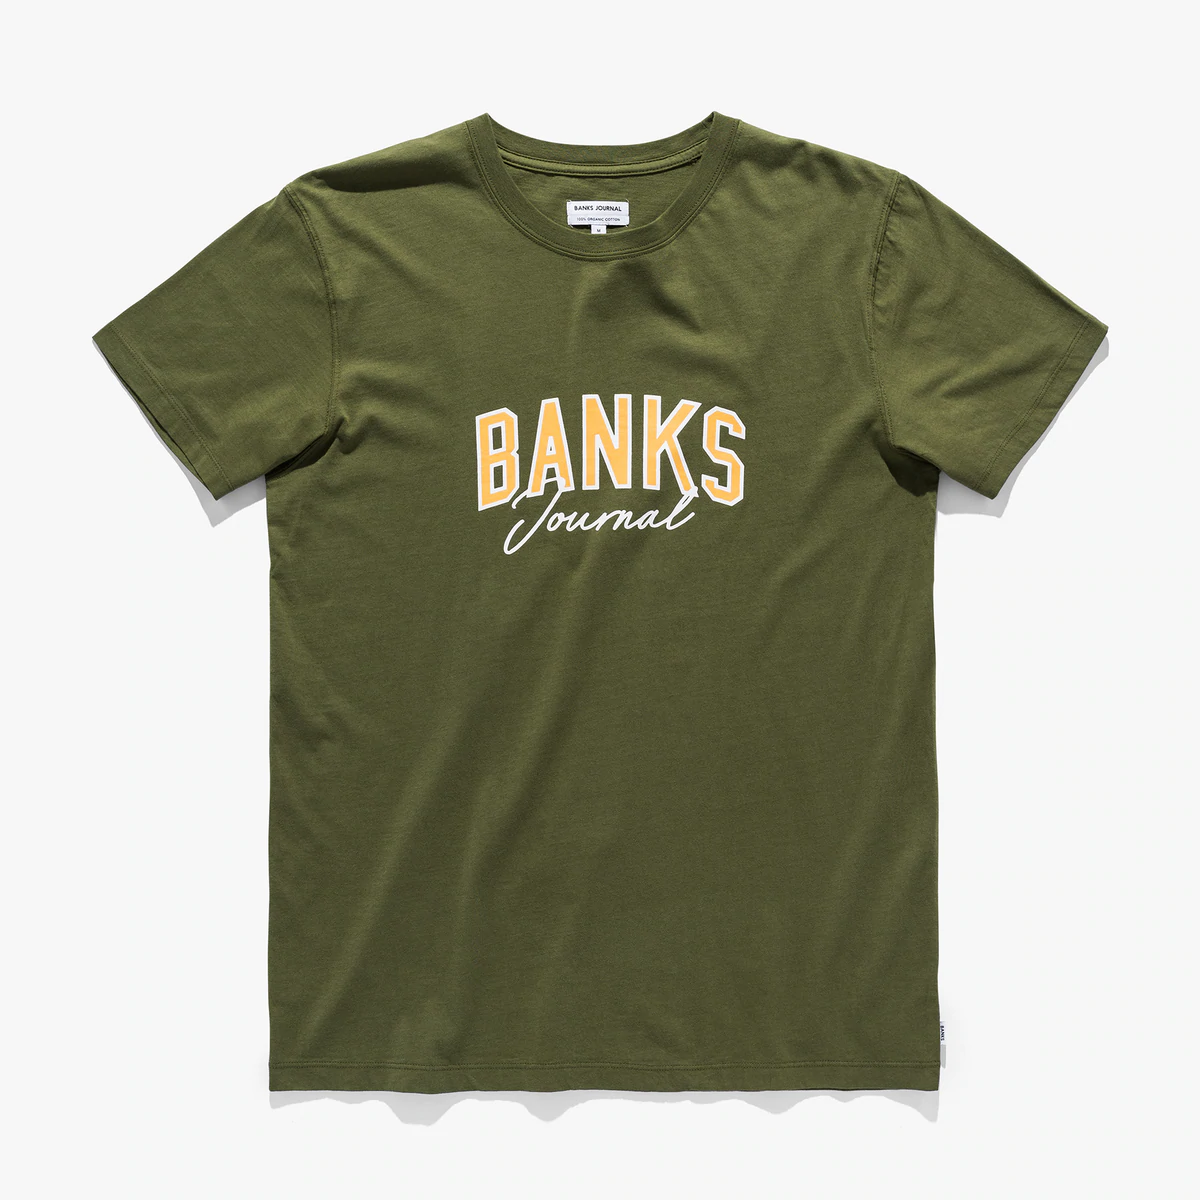 BANKS JOURNAL バンクスジャーナル メンズ TシャツSURPLUS Lサイズ NYC